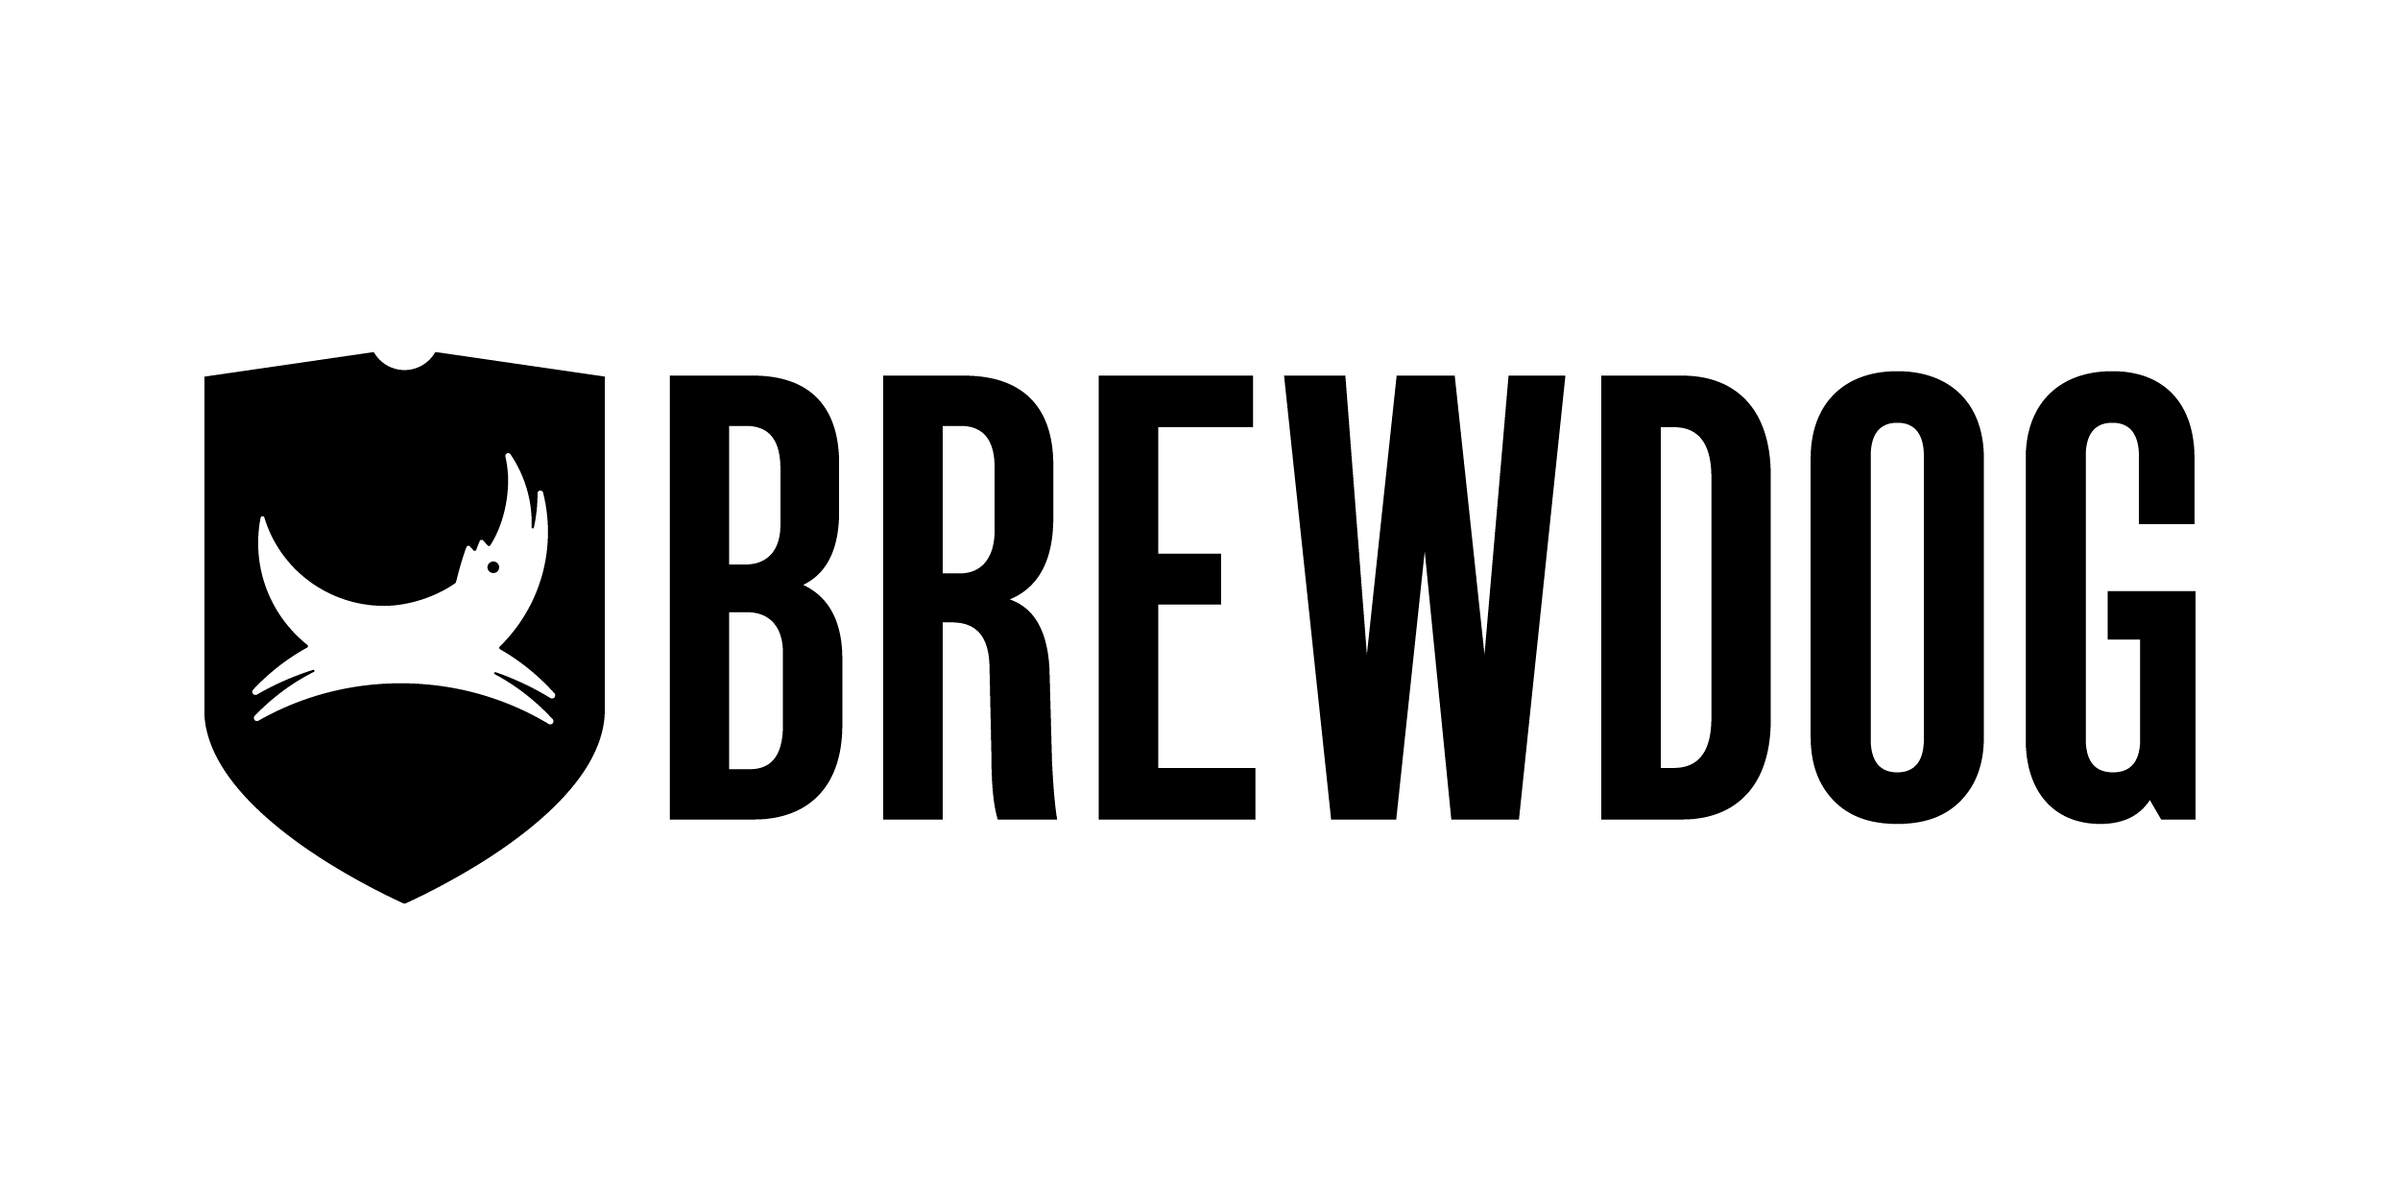 Copywriting agency Brewdog client logo